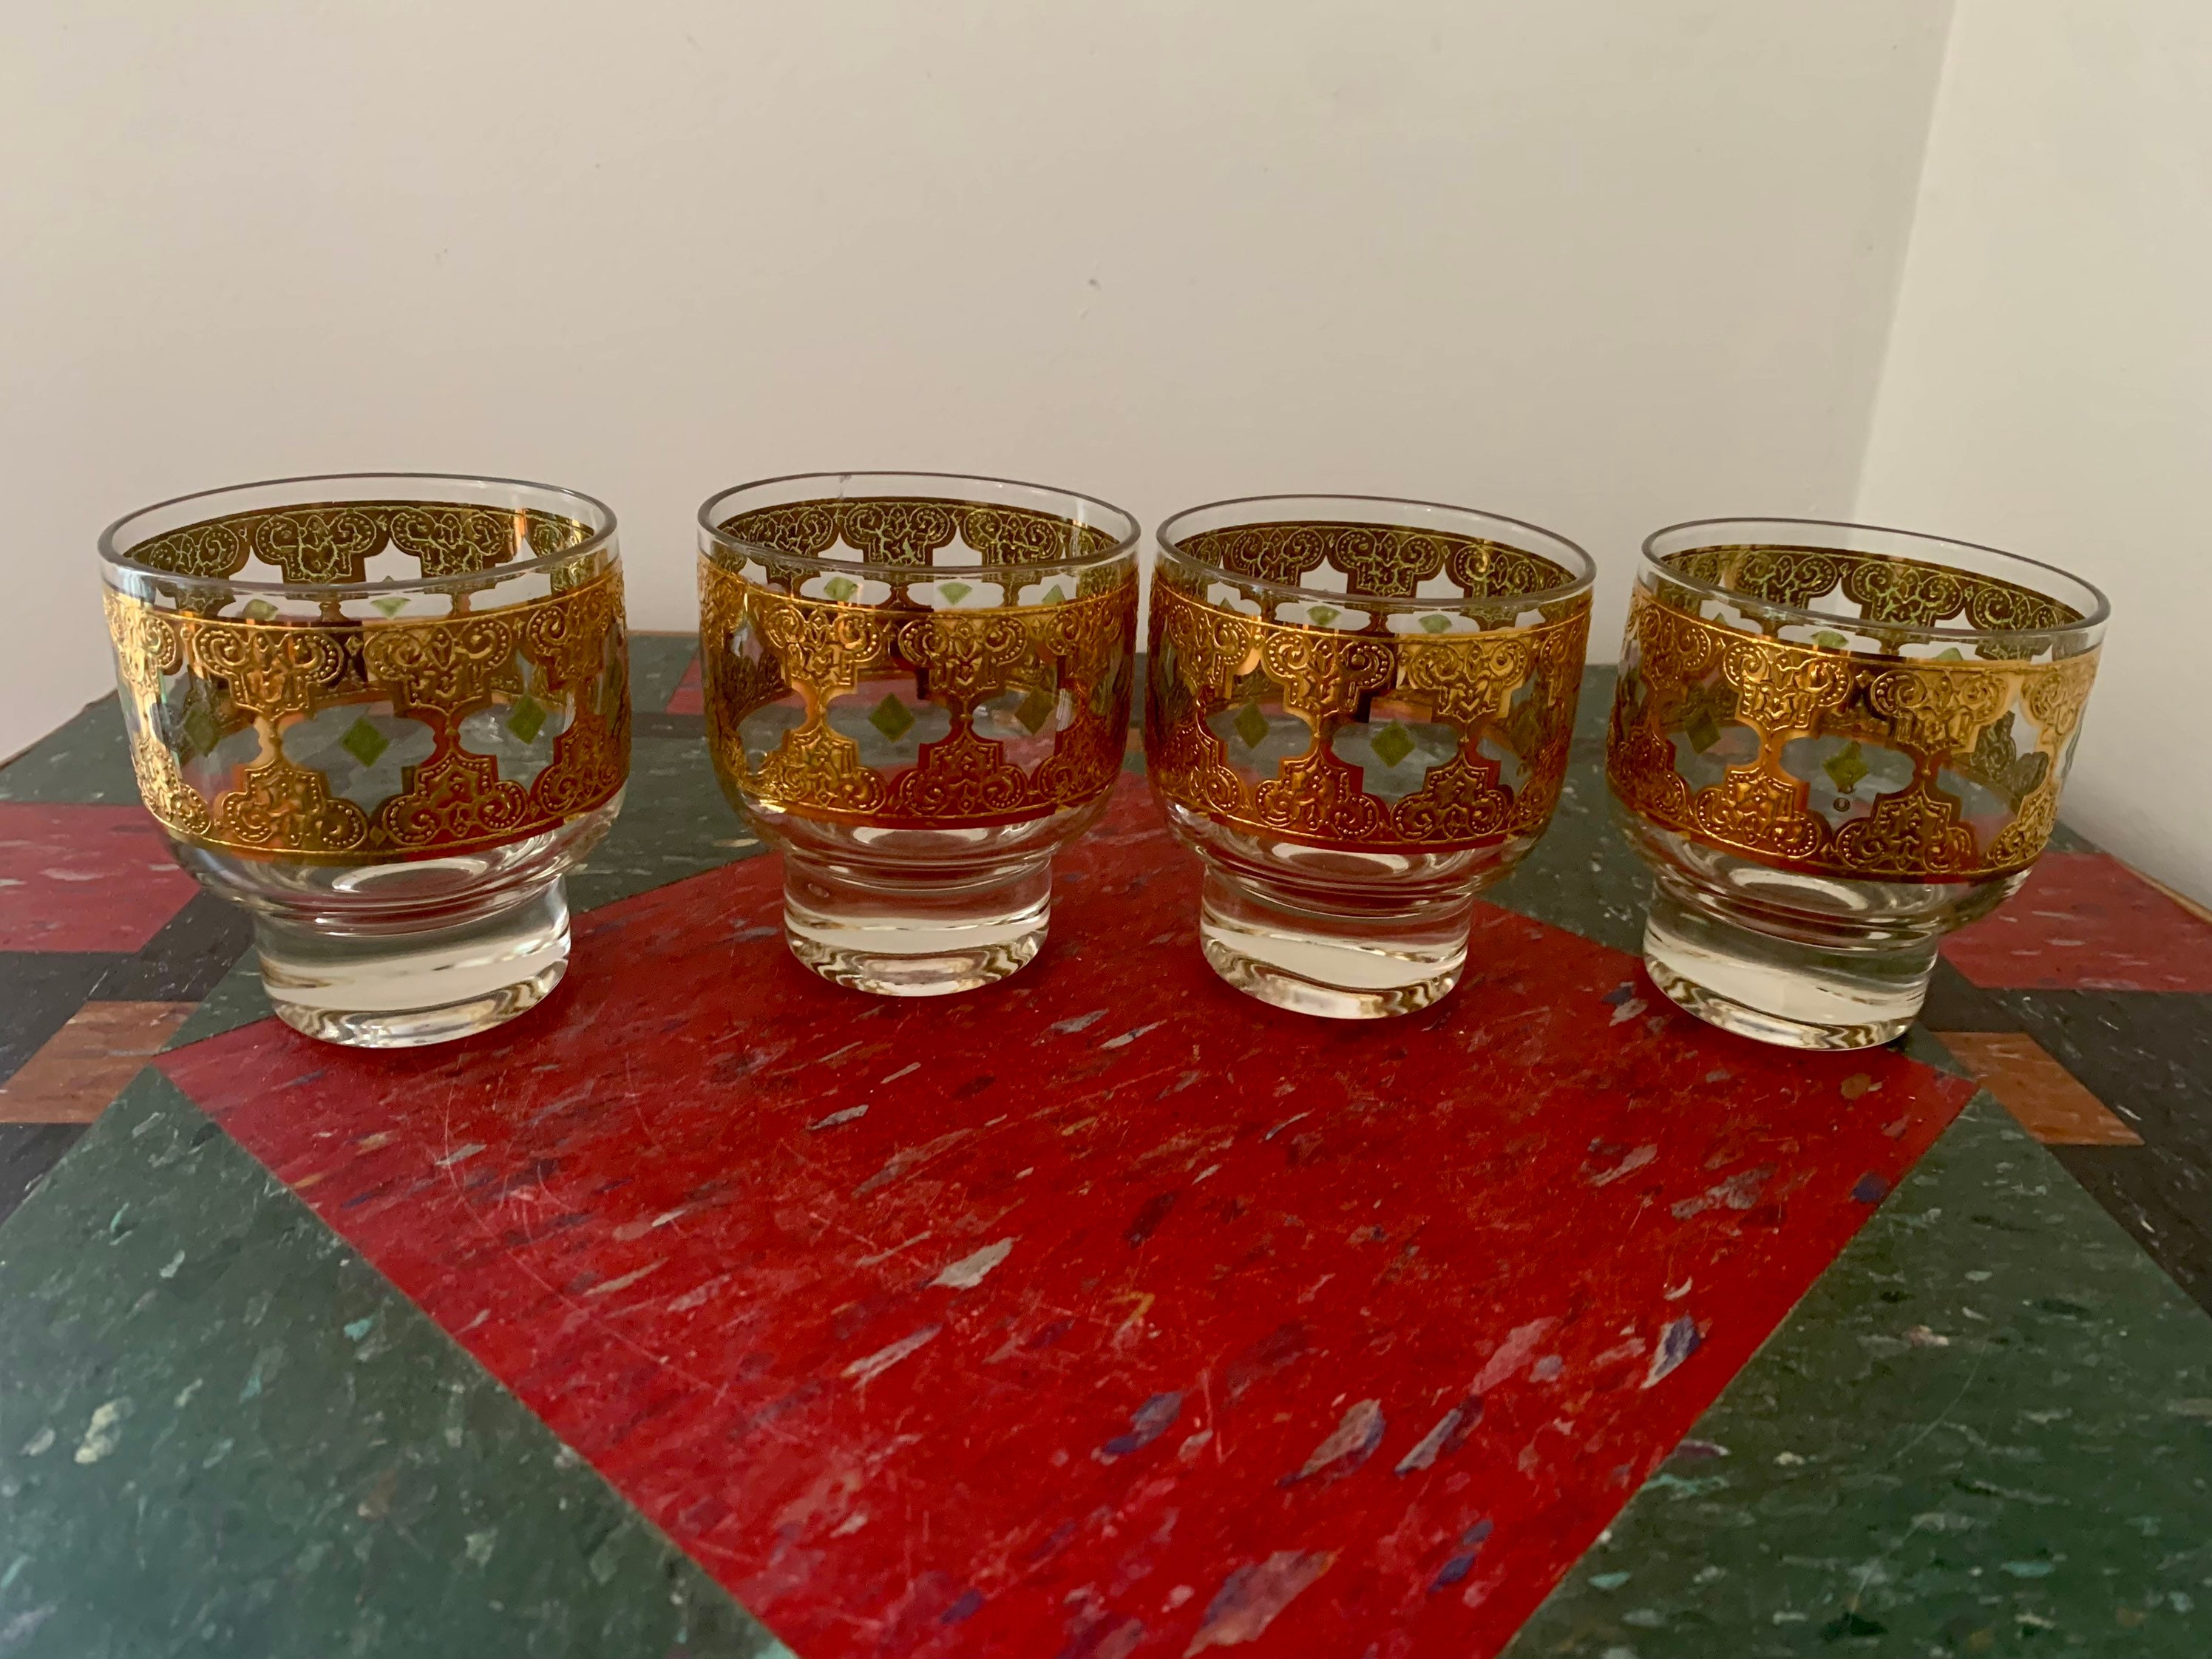 Vintage Culver Highball Glasses, Set of 6 - Hunt and Bloom